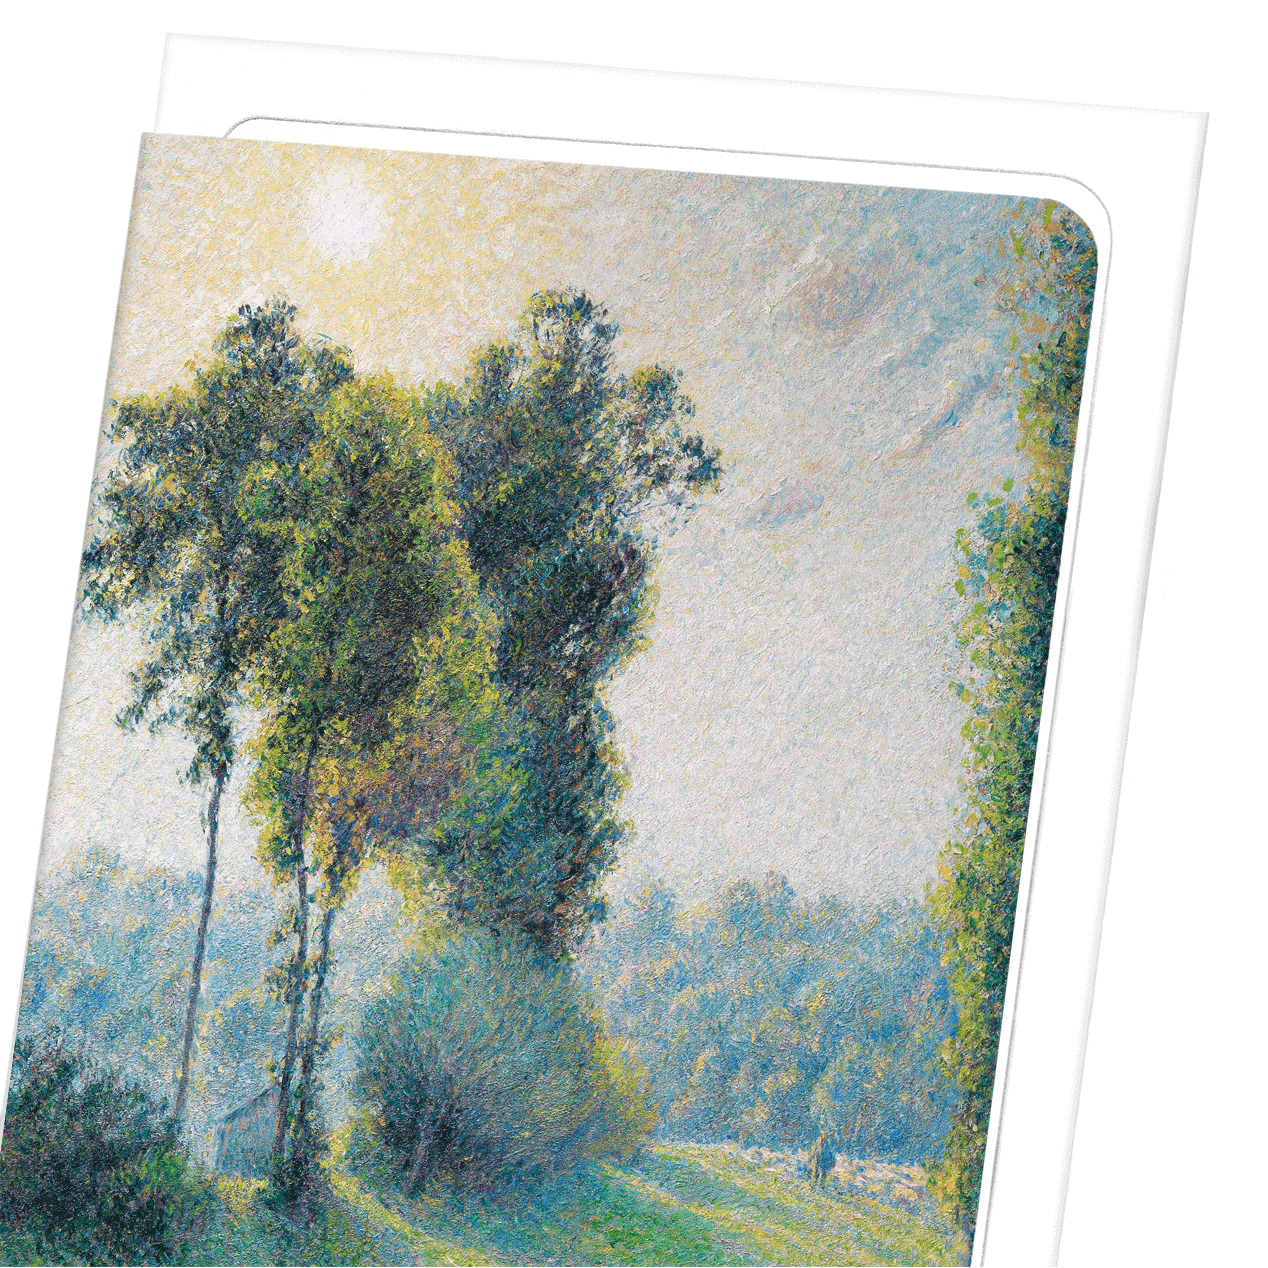 LANDSCAPE AT SAINT-CHARLES, SUNSET (1891): Painting Greeting Card